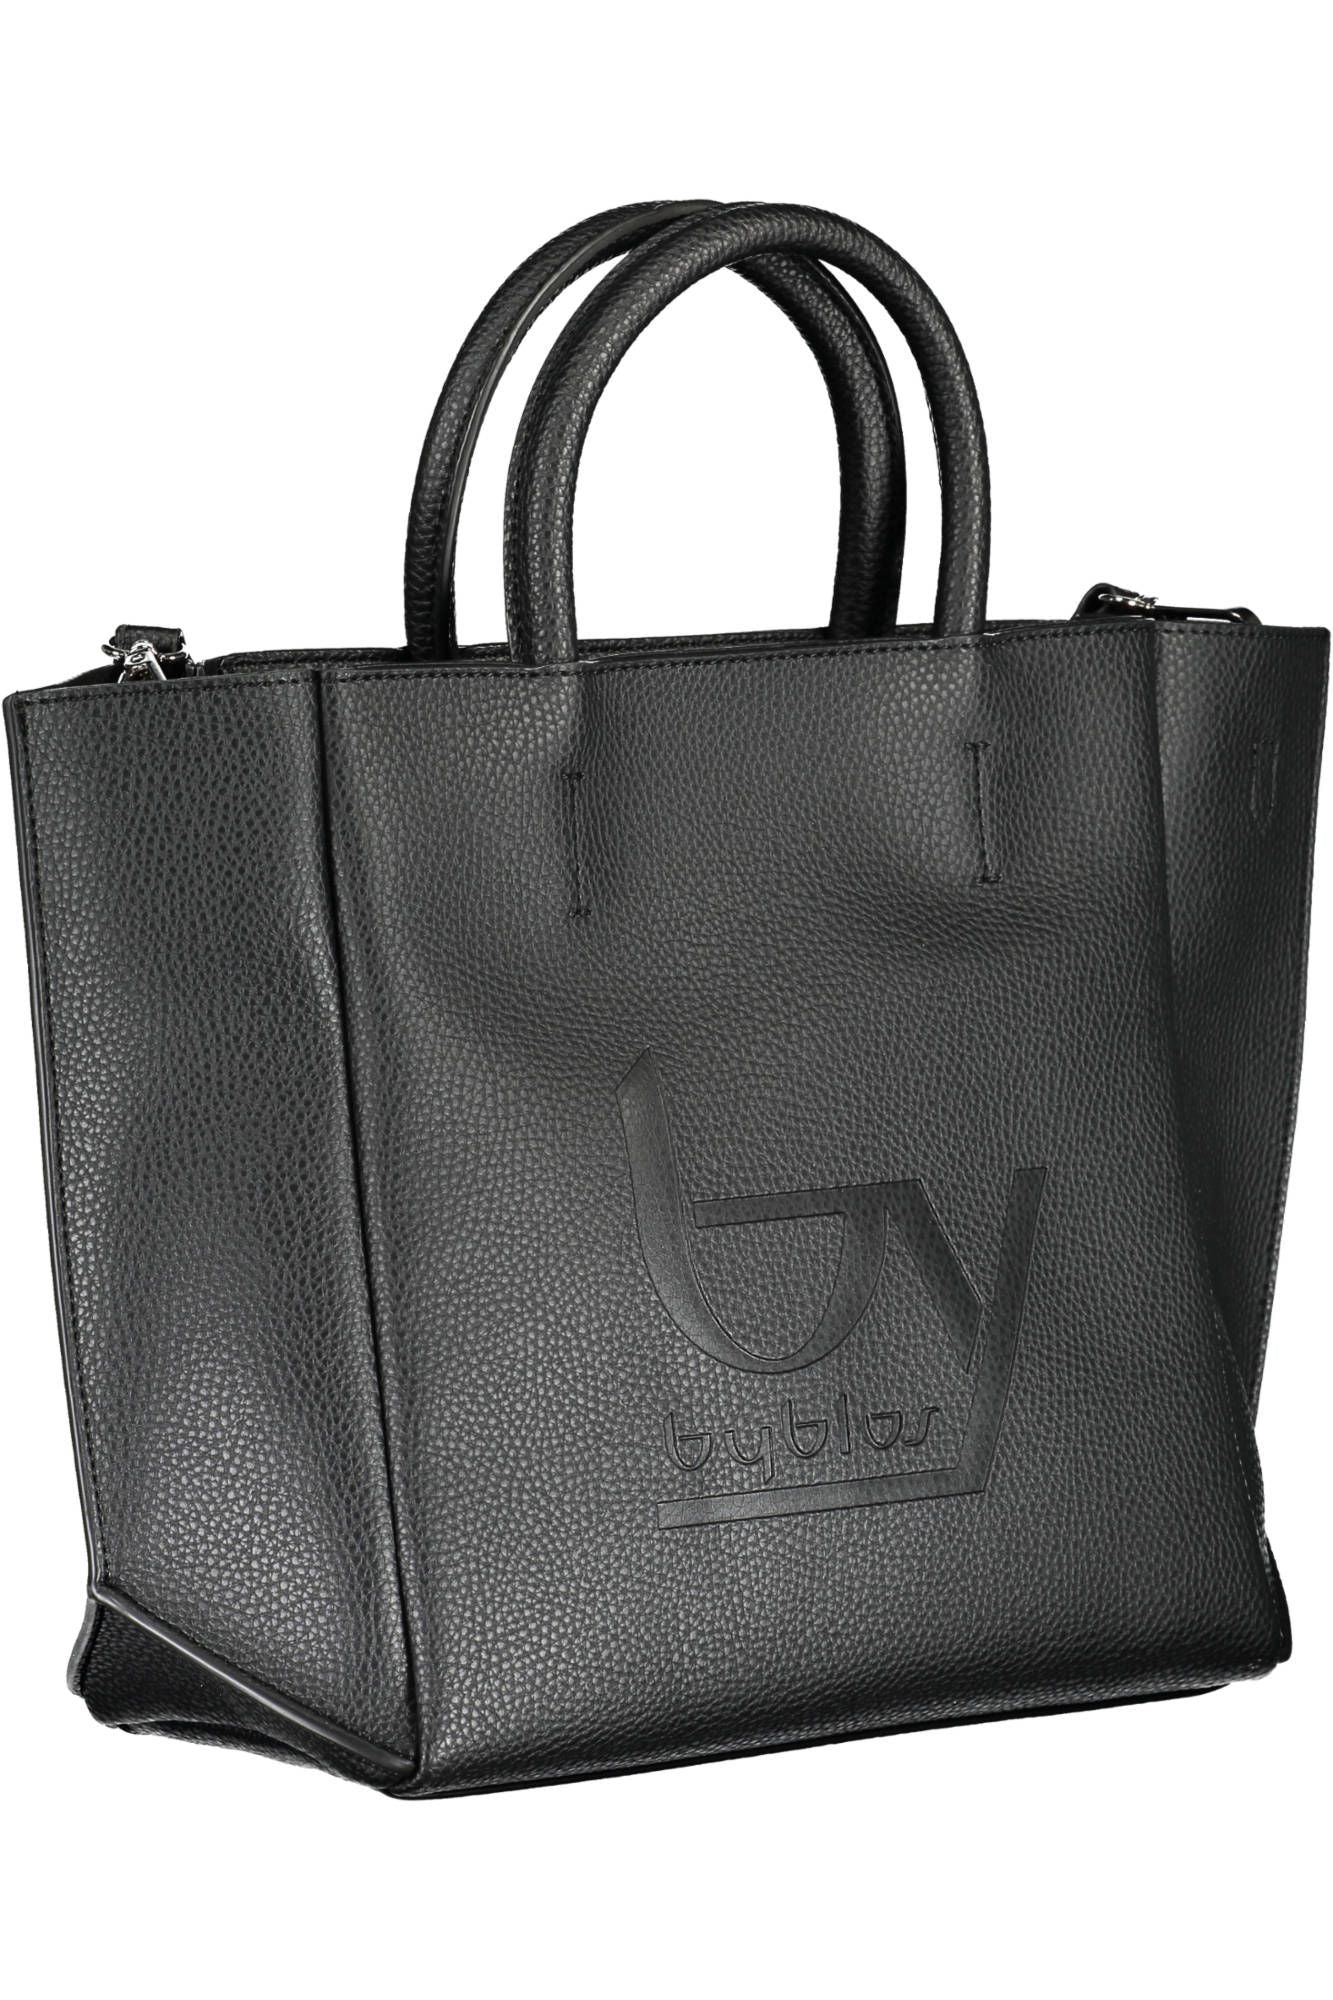 BYBLOS Elegant Black Handbag with Chic Print | Fashionsarah.com